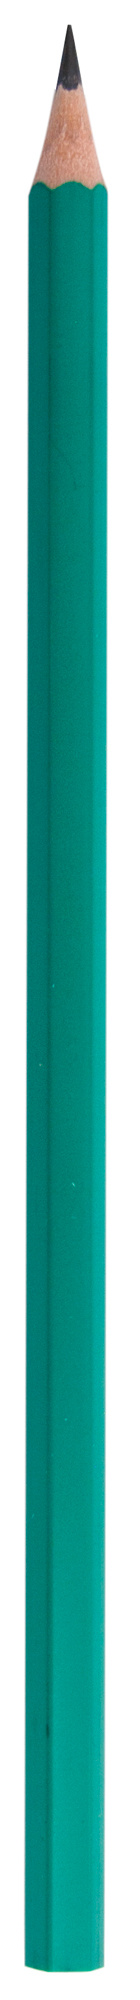 Карандаш чернографитный пластик Buro 2мм HB шестигранный 1562098